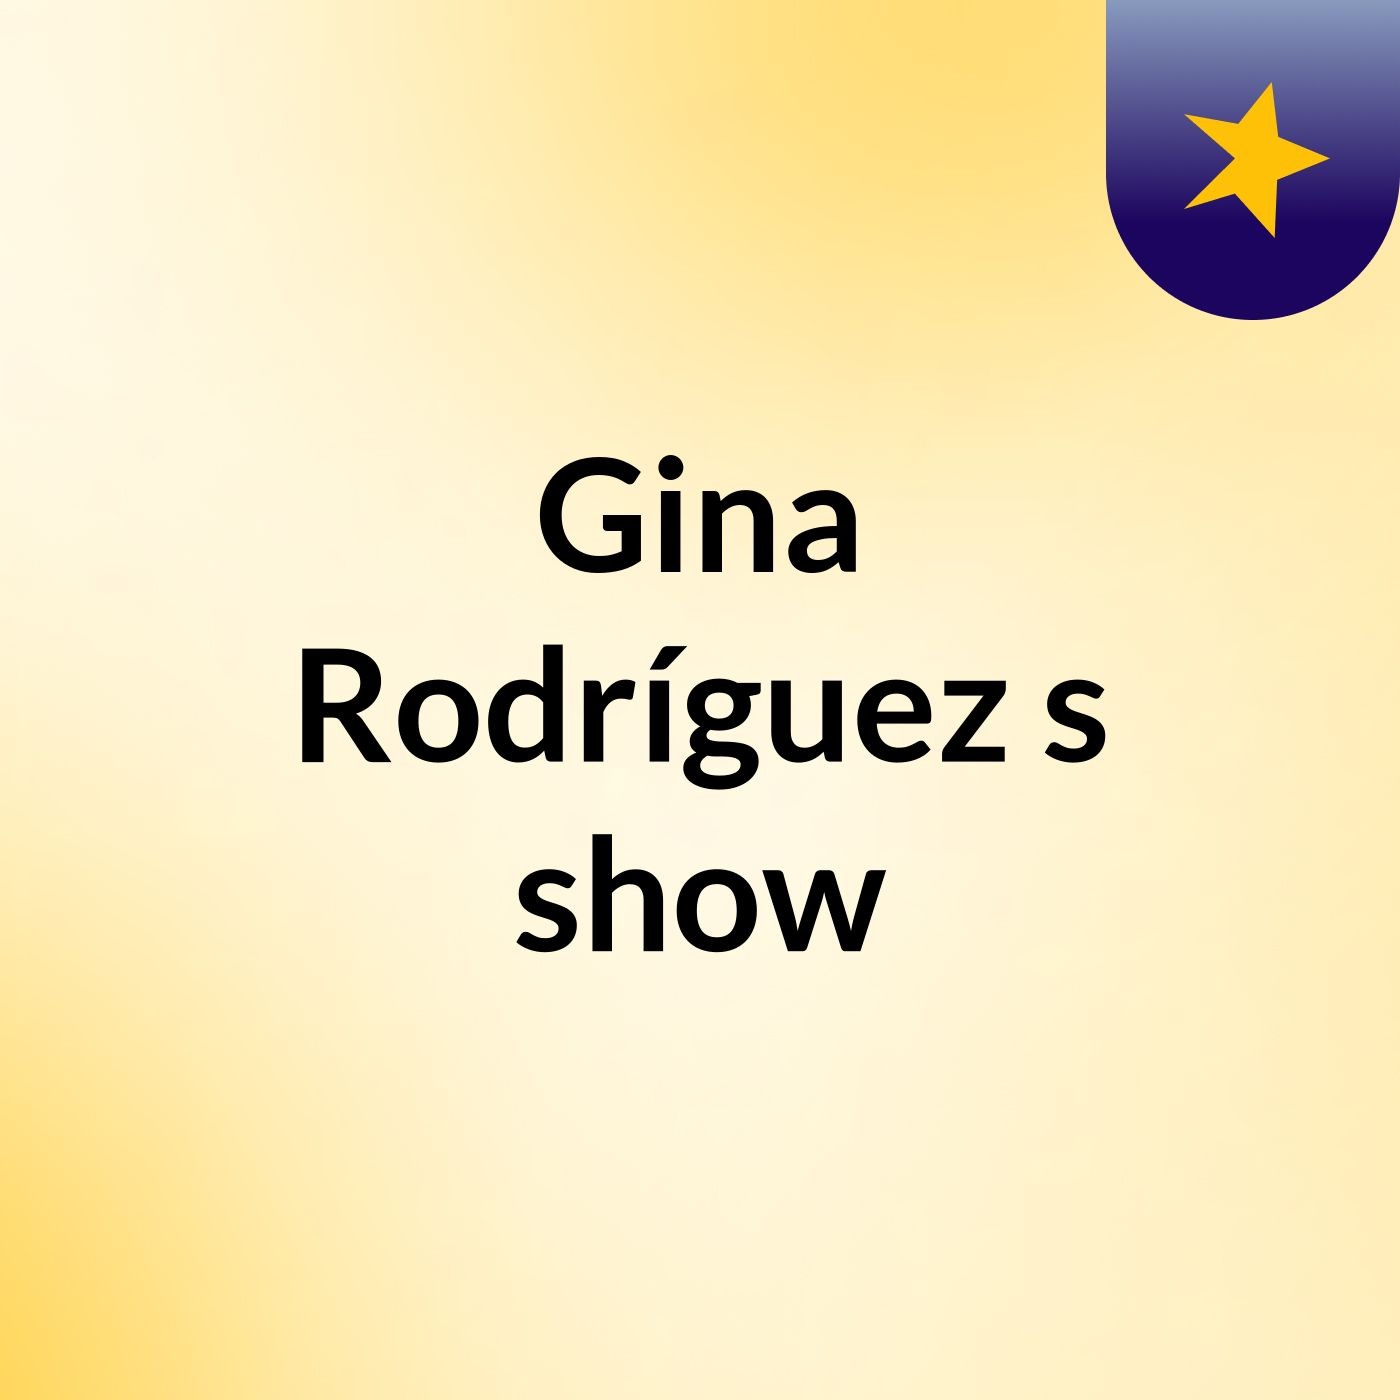 Gina Rodríguez's show